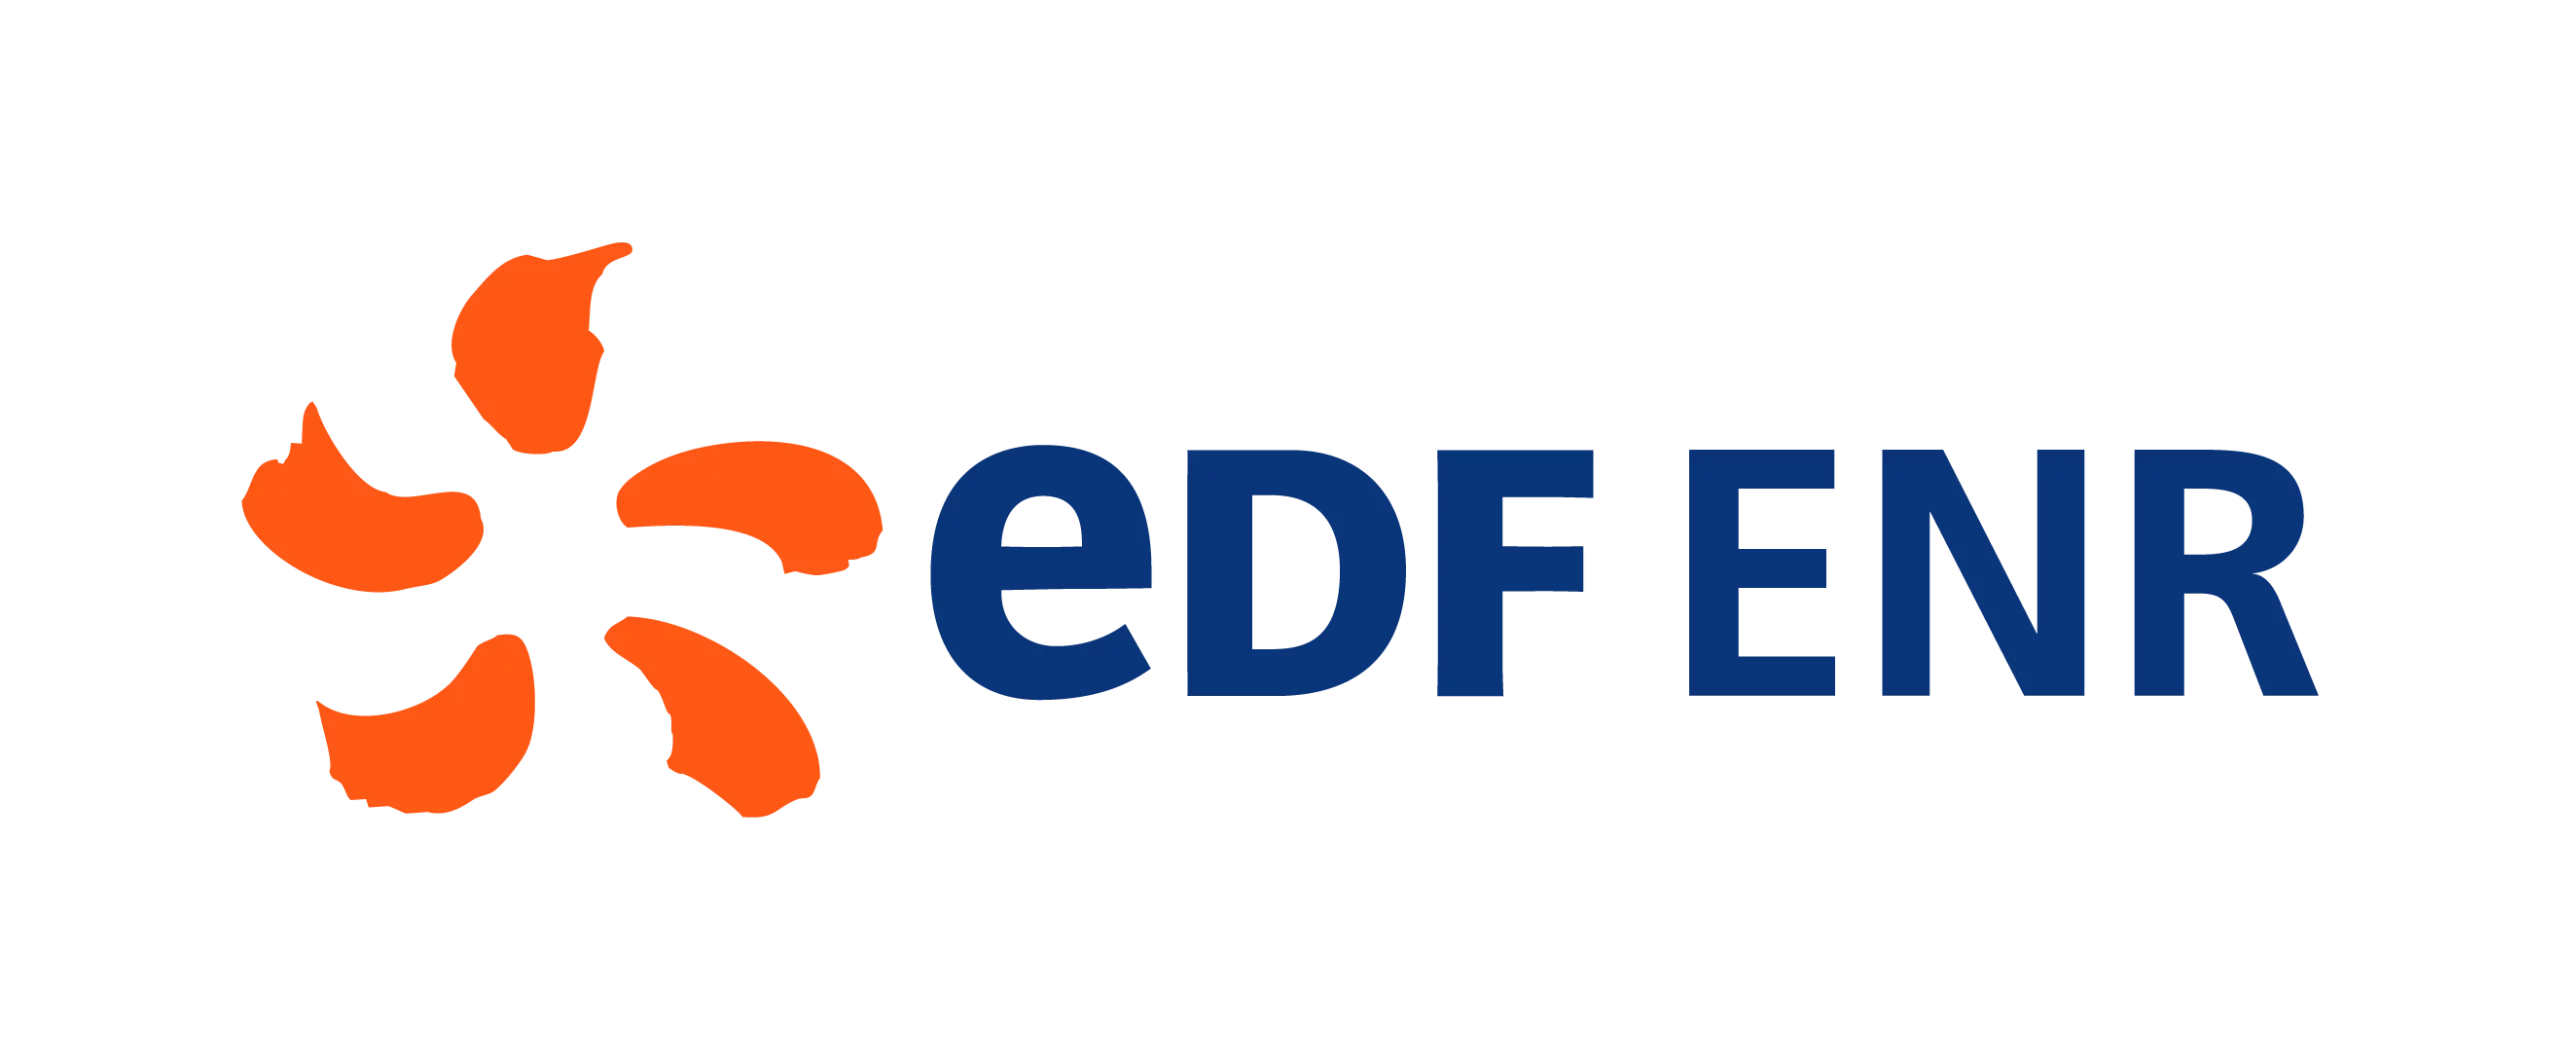 edf enr RGB logo